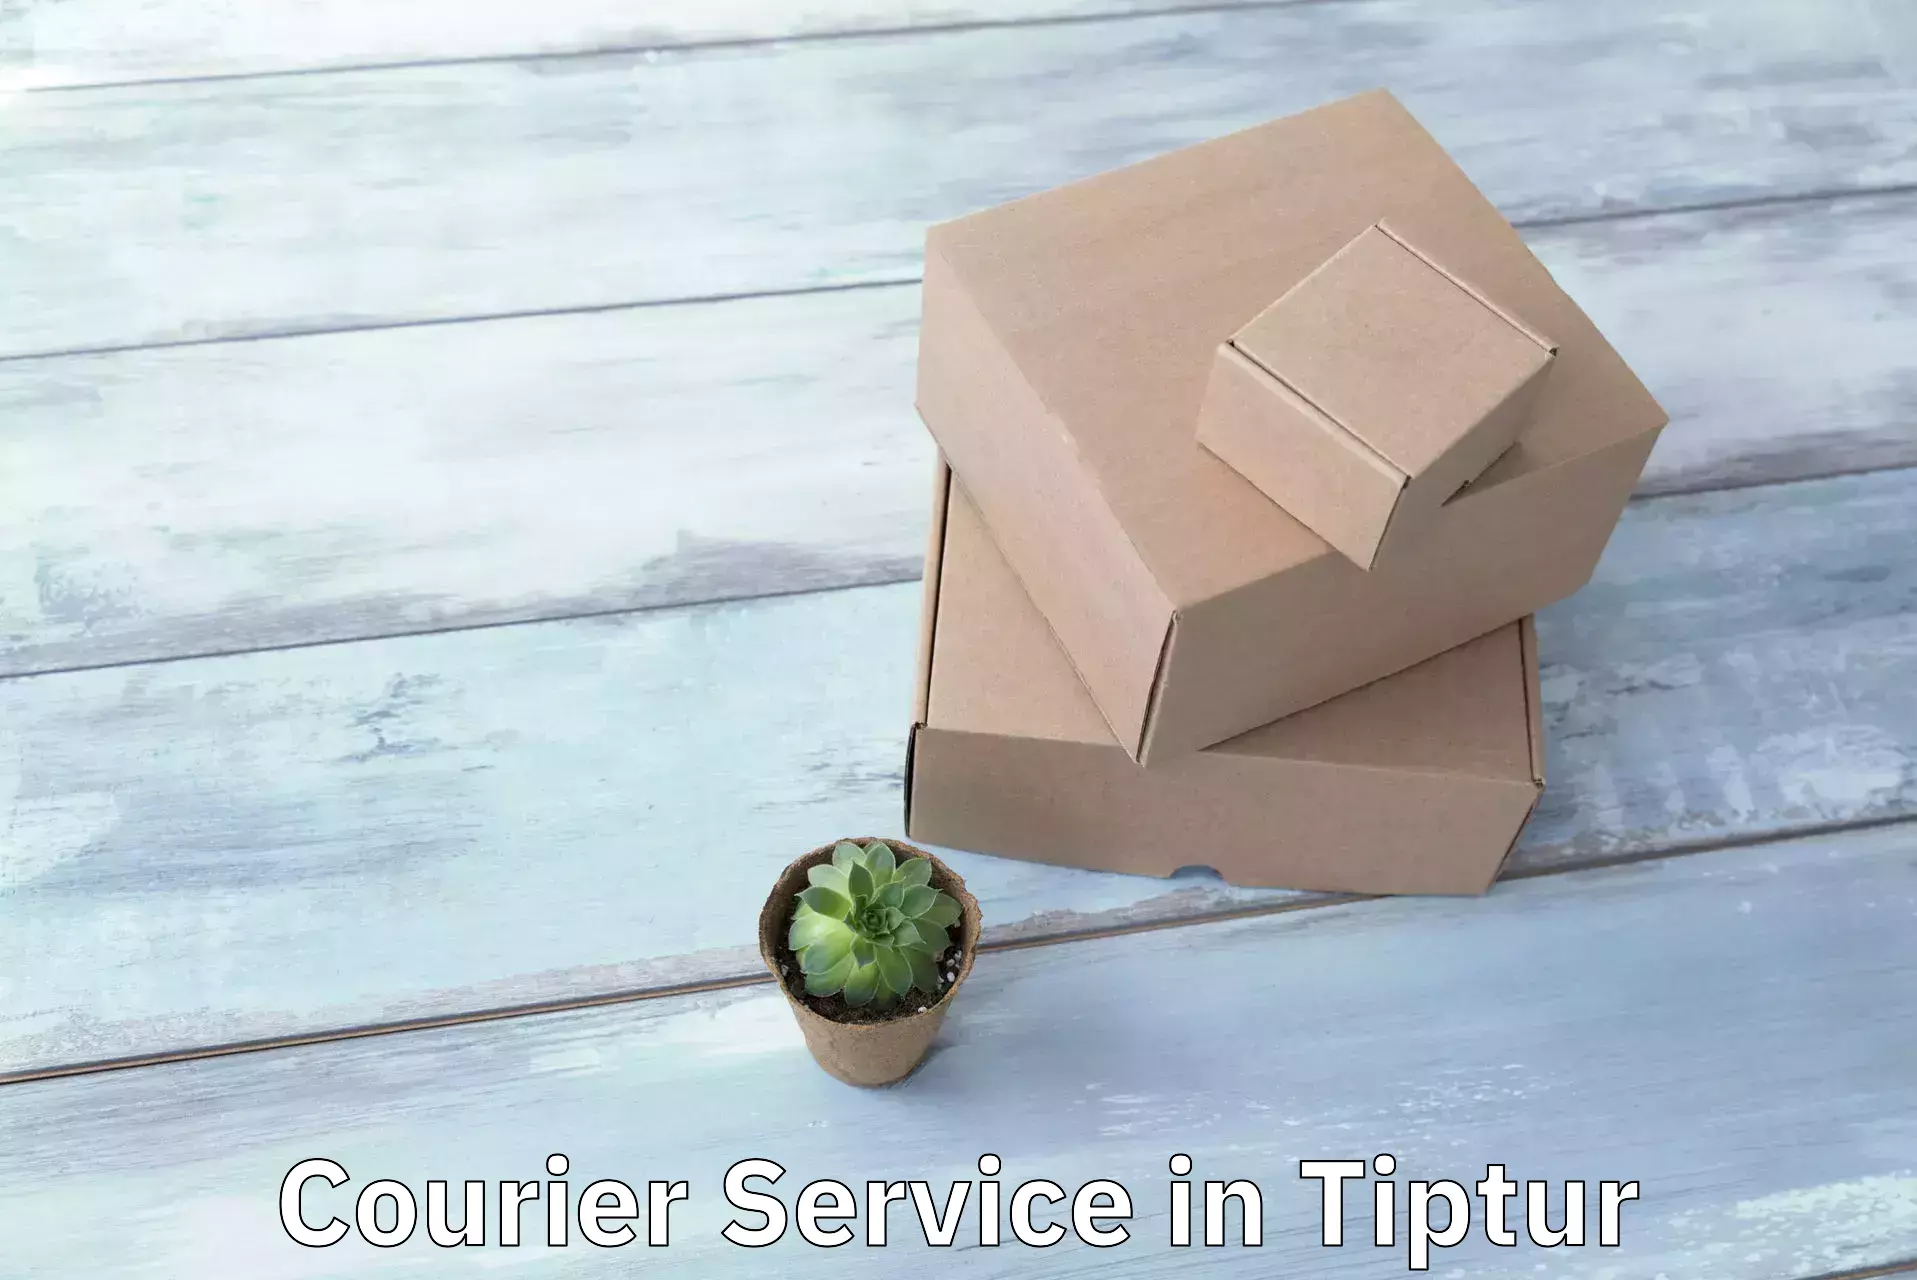 Short distance delivery in Tiptur